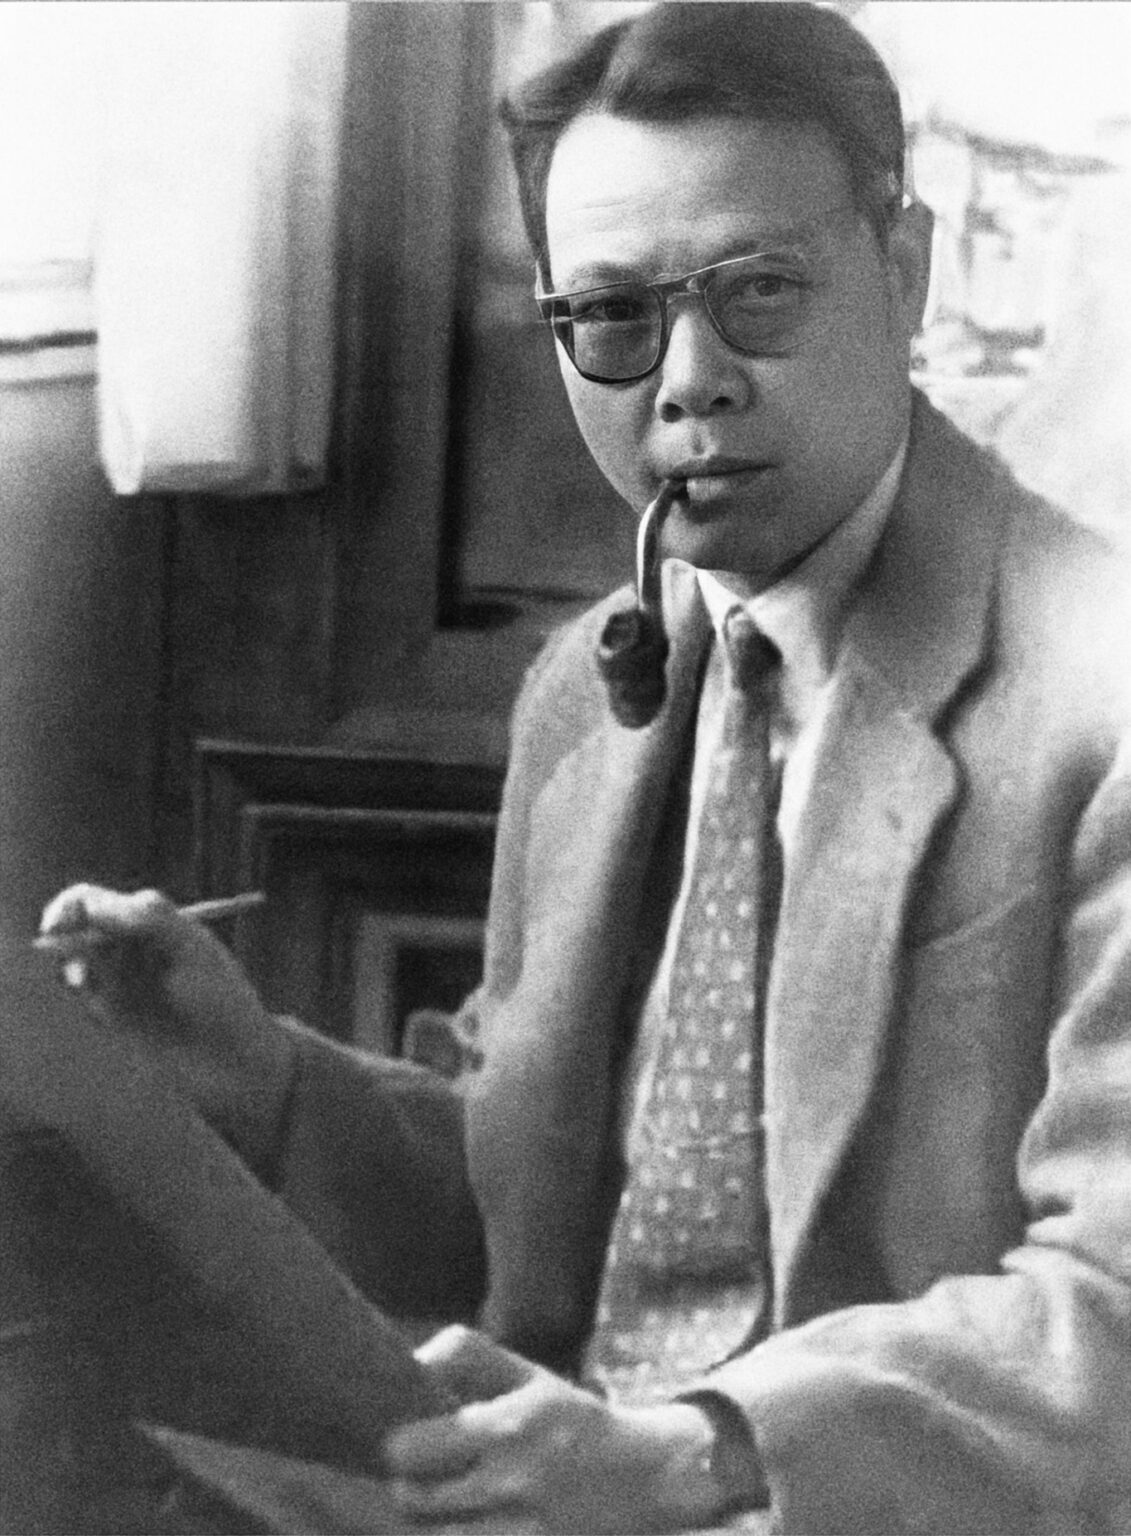 Le Pho (Vietnamese, 1907-2001) in his studio at rue Bonnet in Paris, 1951